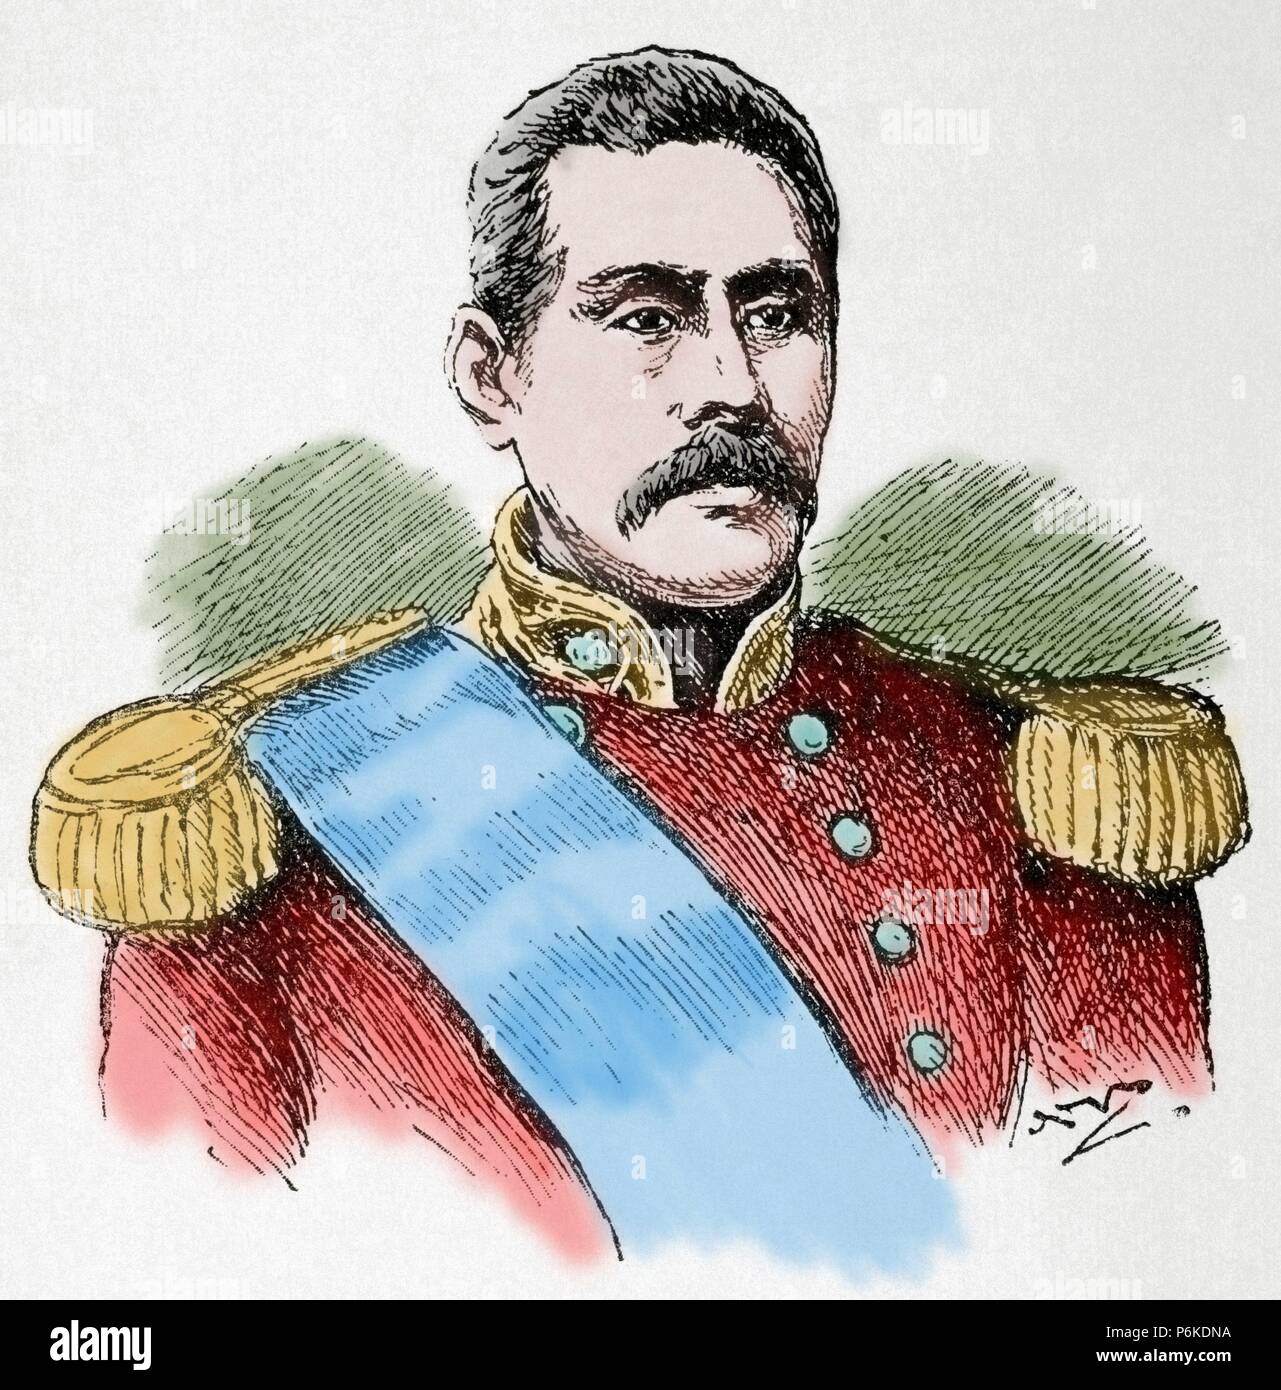 Susuga Malietoa Laupepa (1841-1898). Gouverneur de Samoa à la fin du xixe siècle. La gravure. La Ilustracion Artistica, 1898. De couleur. Banque D'Images